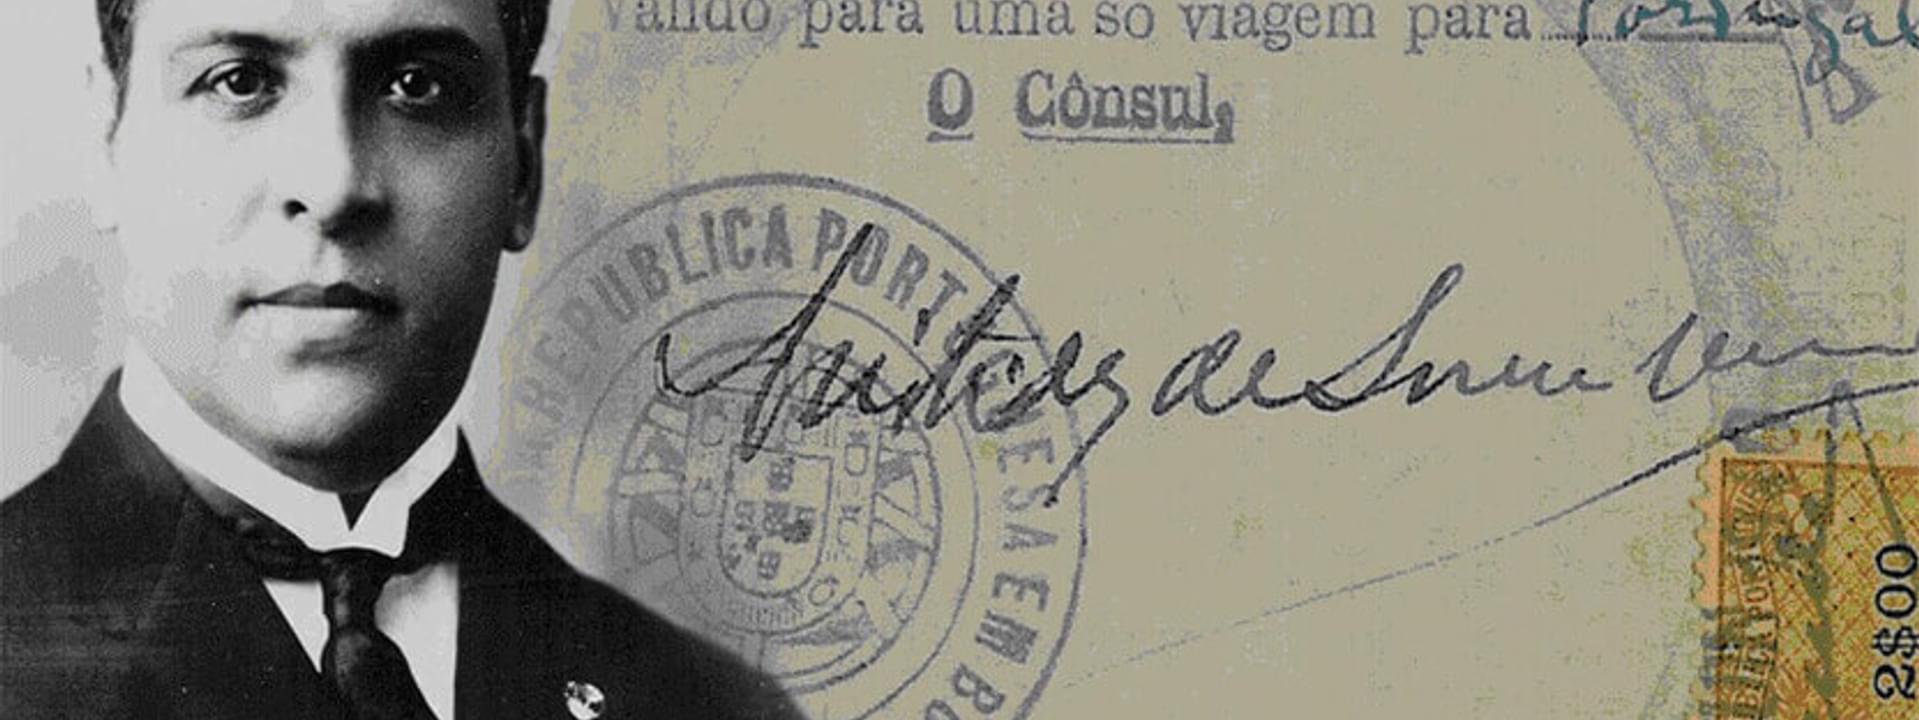 Aristides de Sousa Mendes: the insubordinate consul